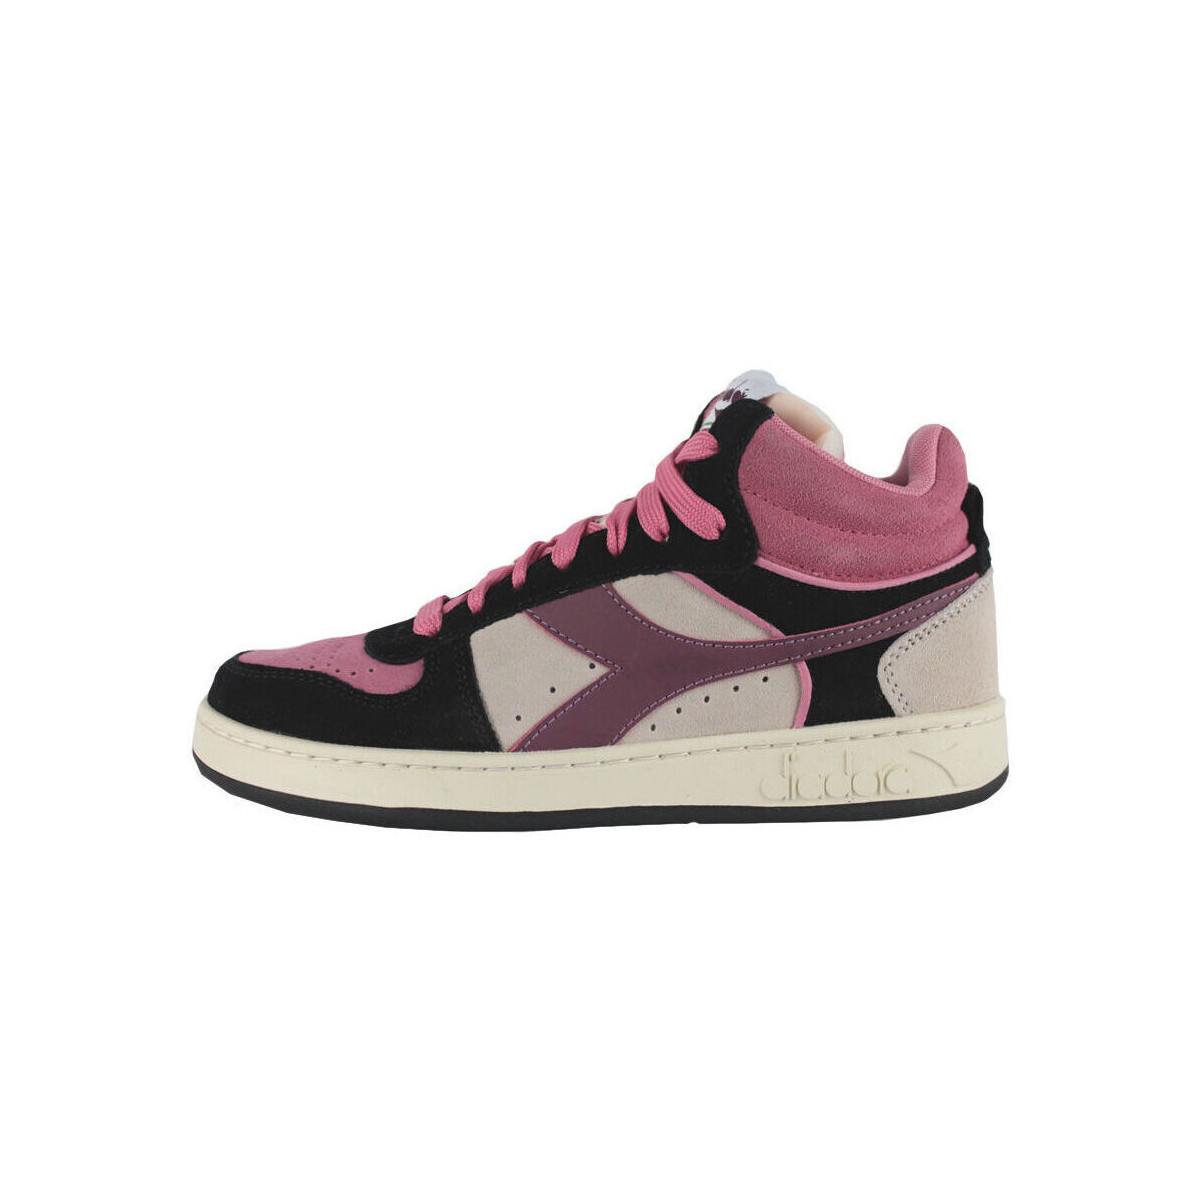 Sko Dame Sneakers Diadora 501.179012 01 D0111 Silver peony/Black/Tea ro Pink